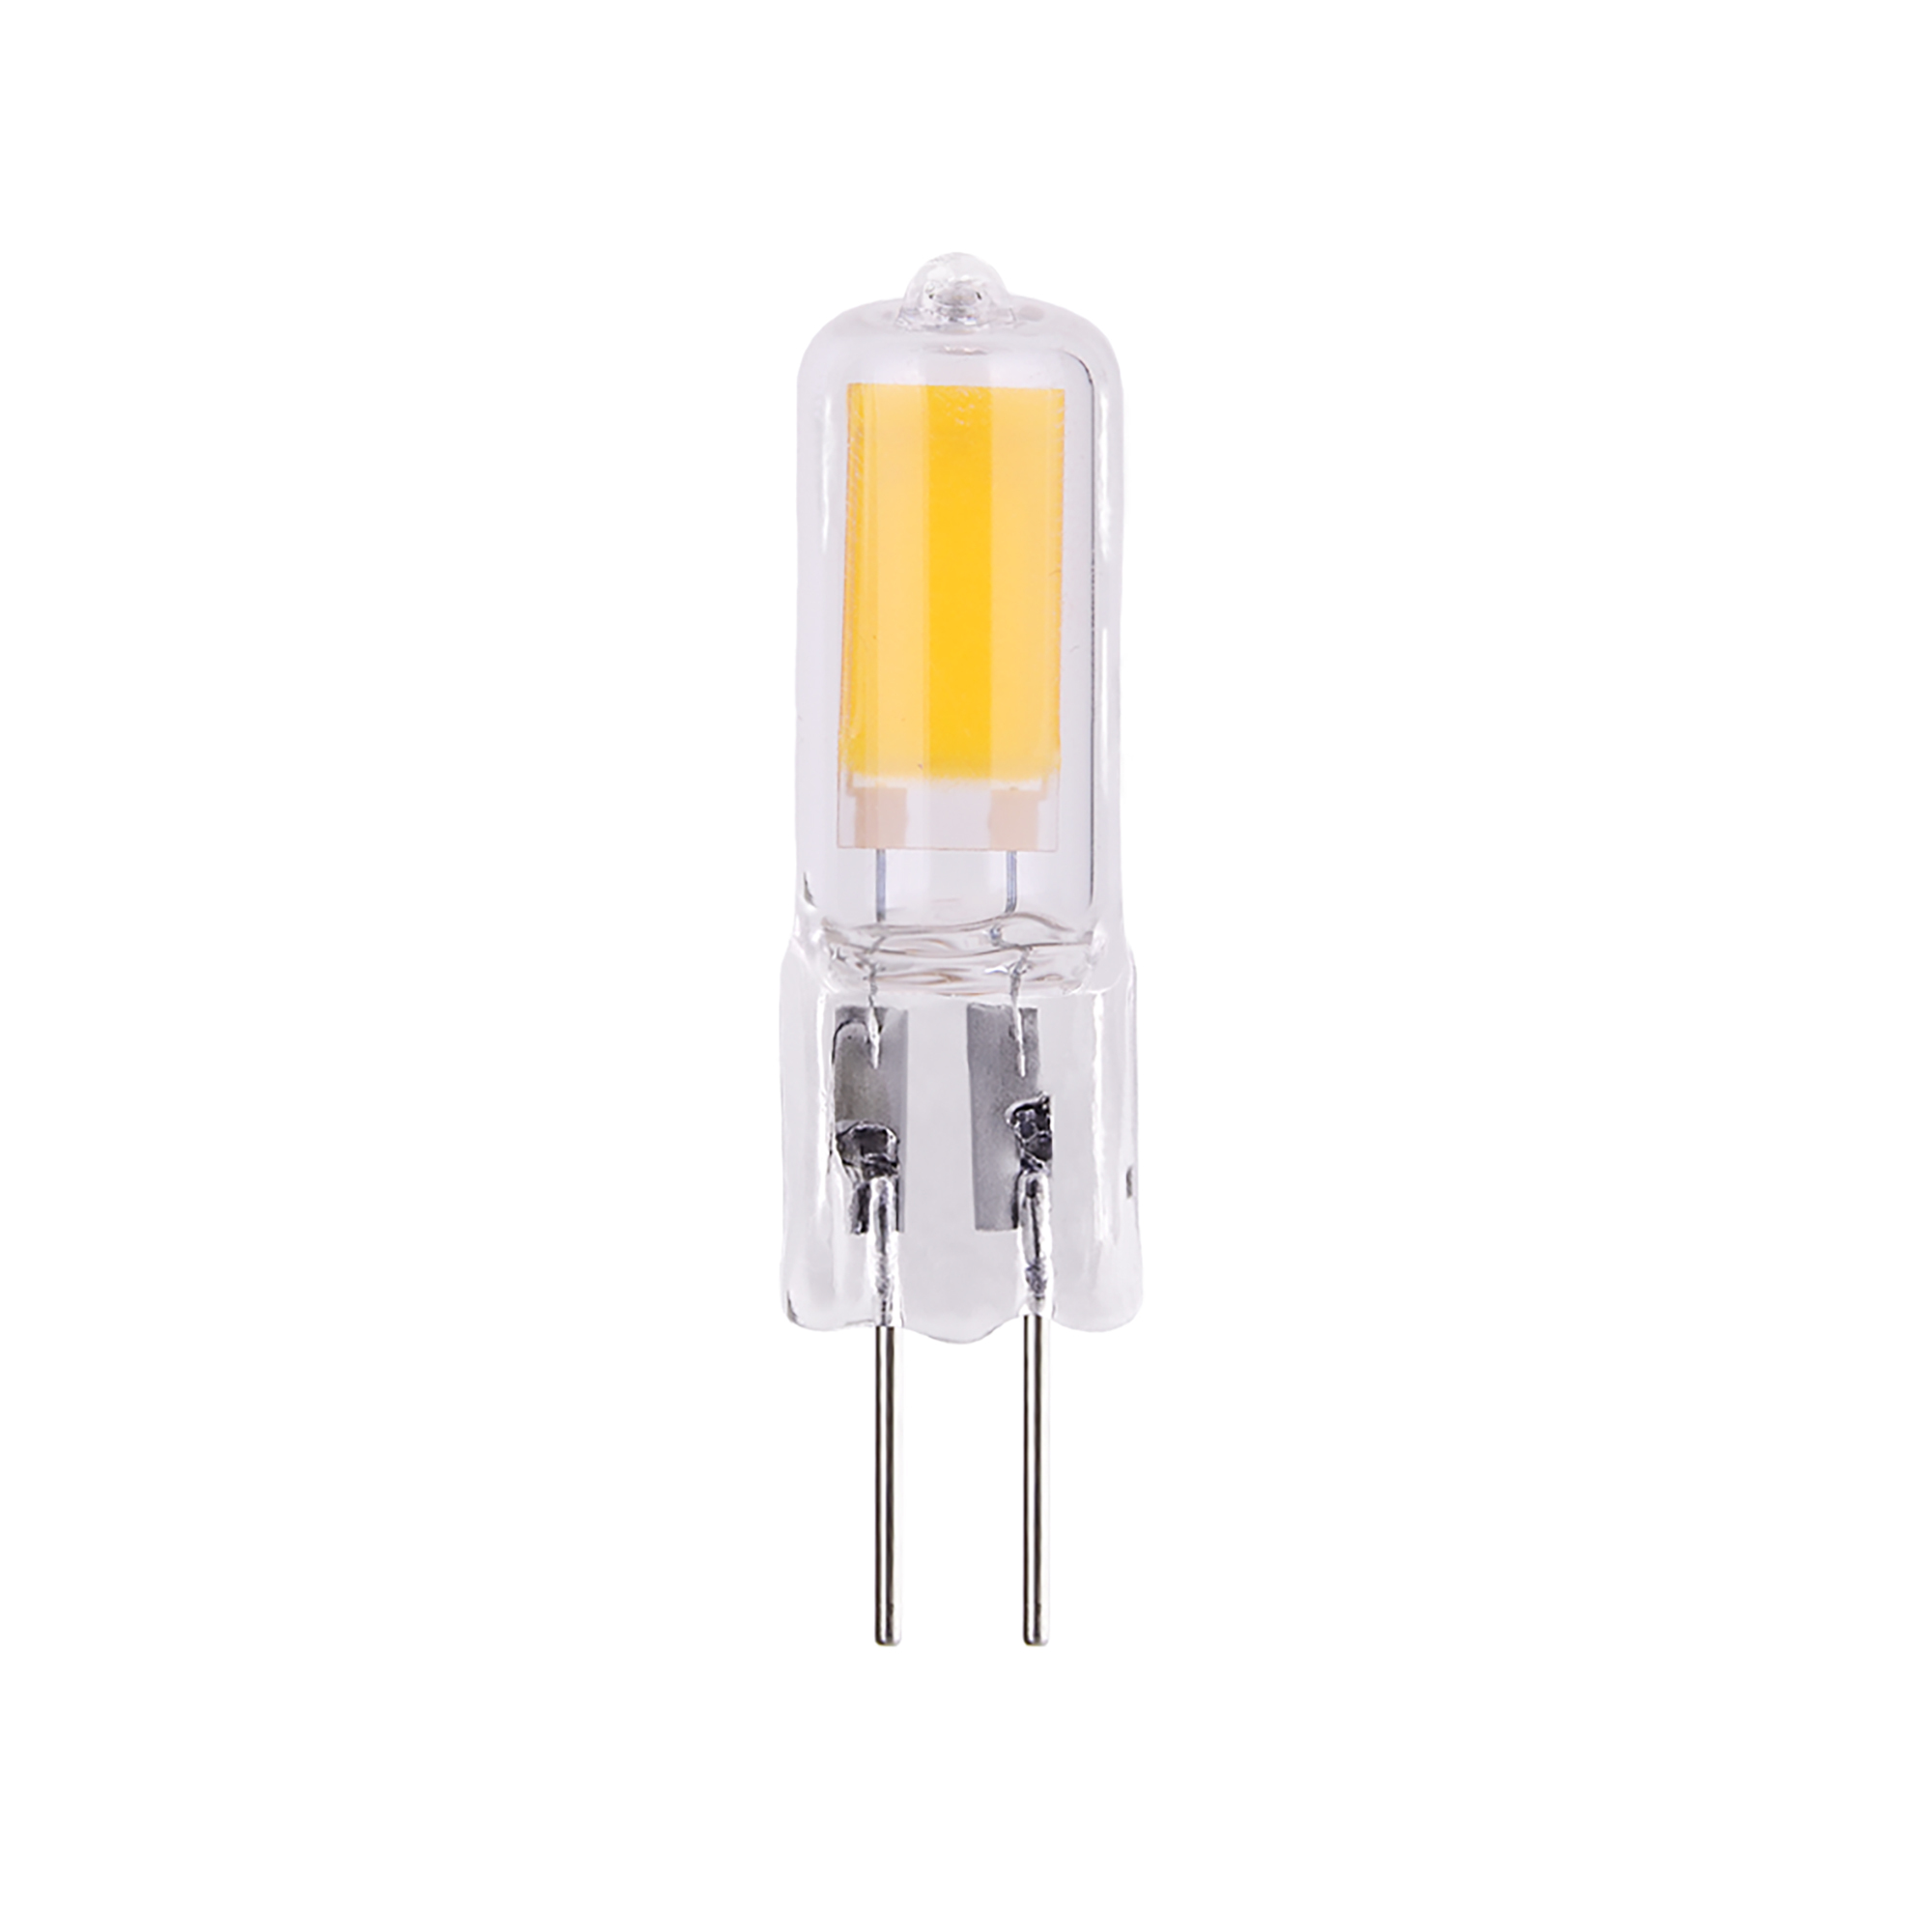 Лампа светодиодная Elektrostandard G4 JCD 3 Вт 3300К теплый свет 220 В капсула (BLG416)